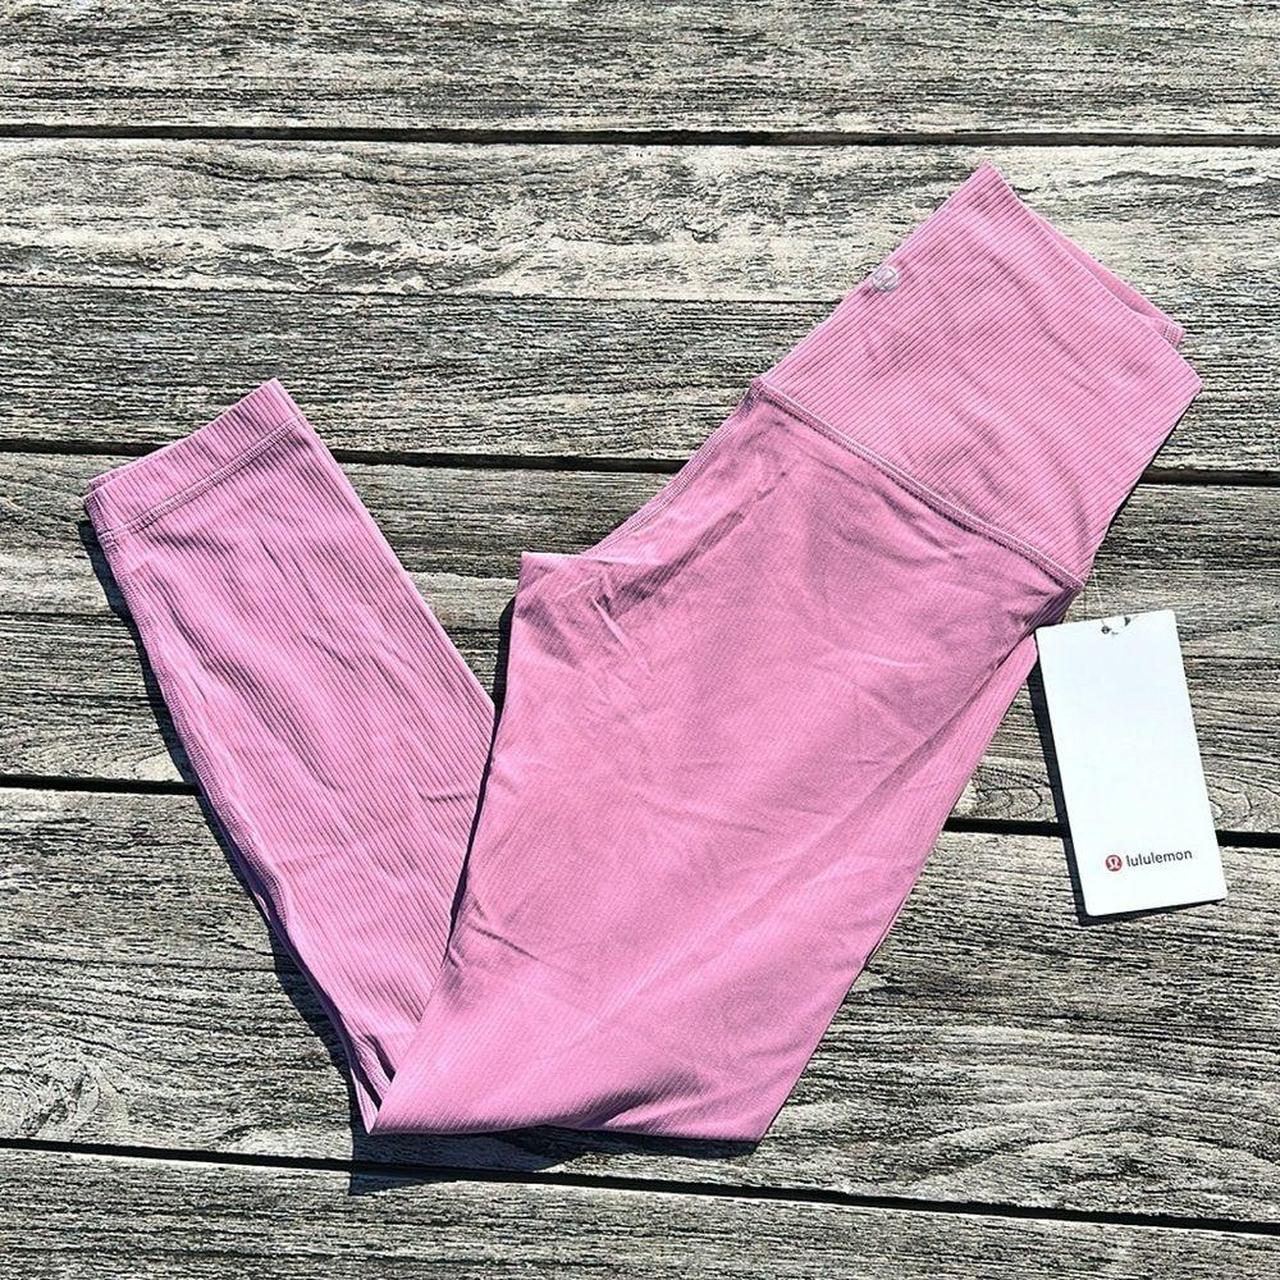 Lululemon Align Pant II 25 inch Light pink Lululemon - Depop